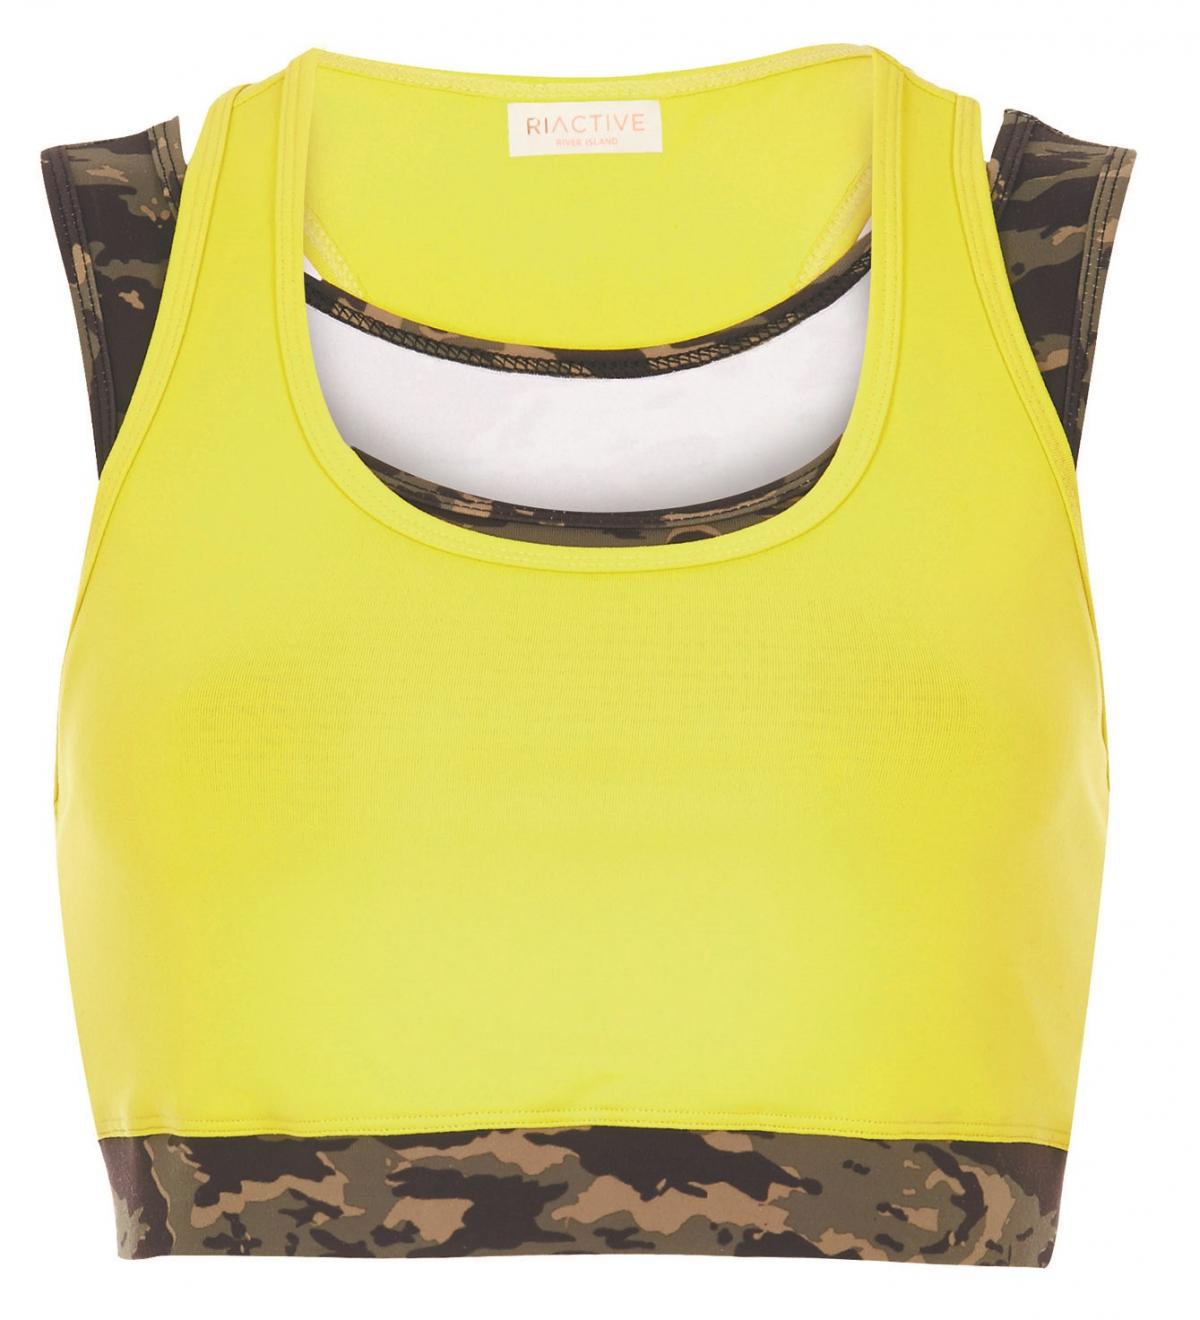 River Island, Active yellow camouflage print sports bra, £22